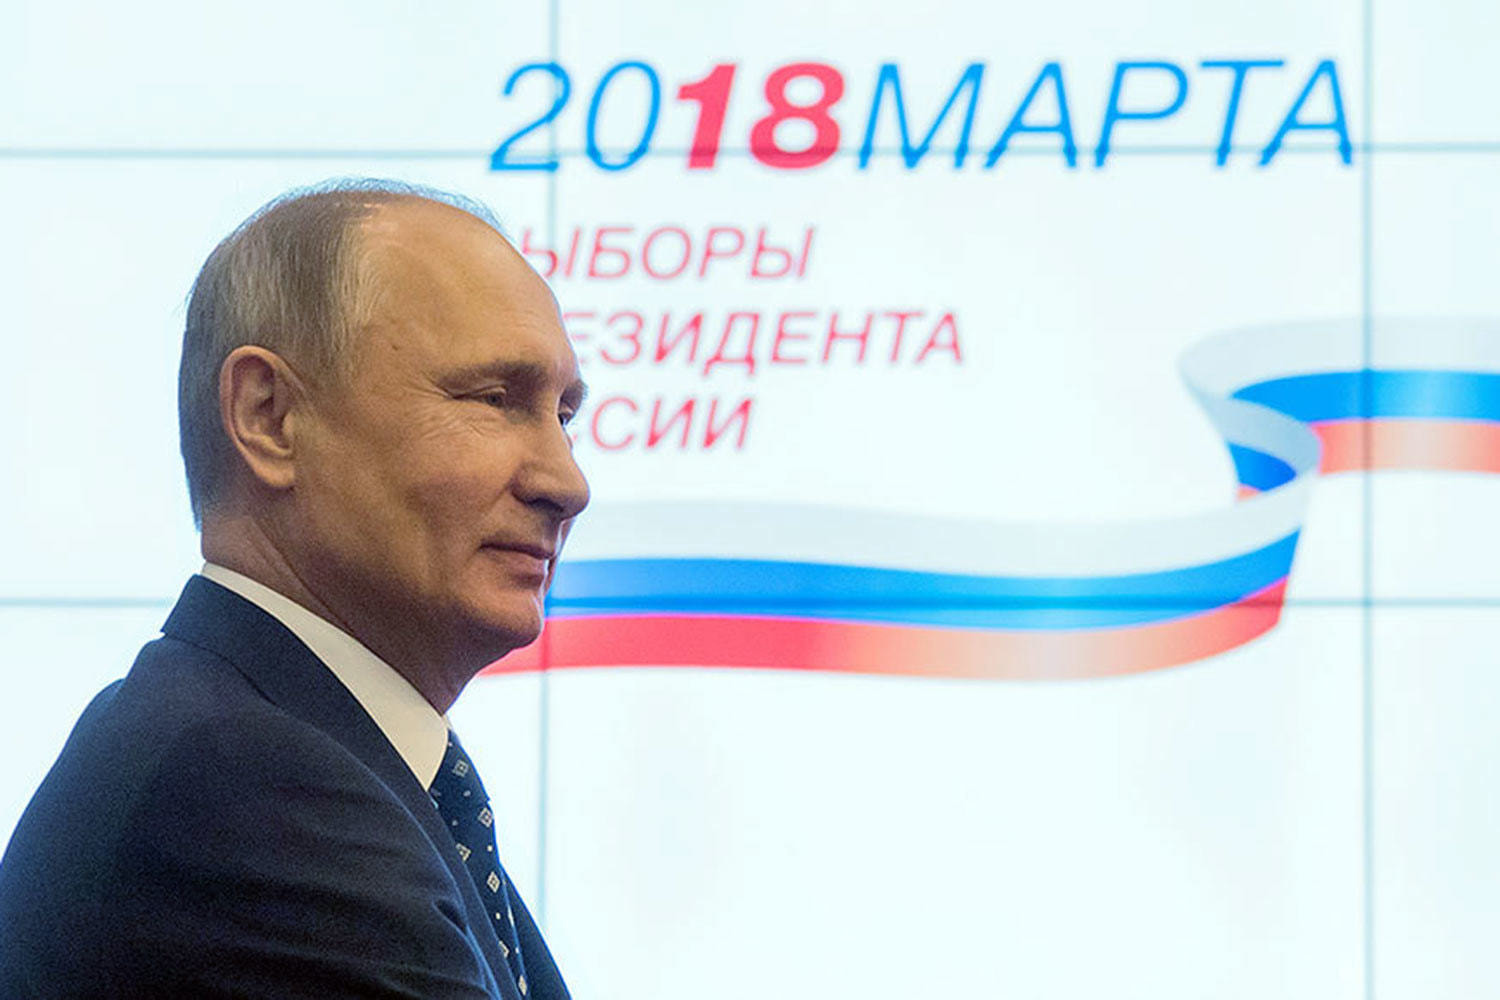 Сурайкин и Грудинин поздравили Путина с победой на выборах президента 